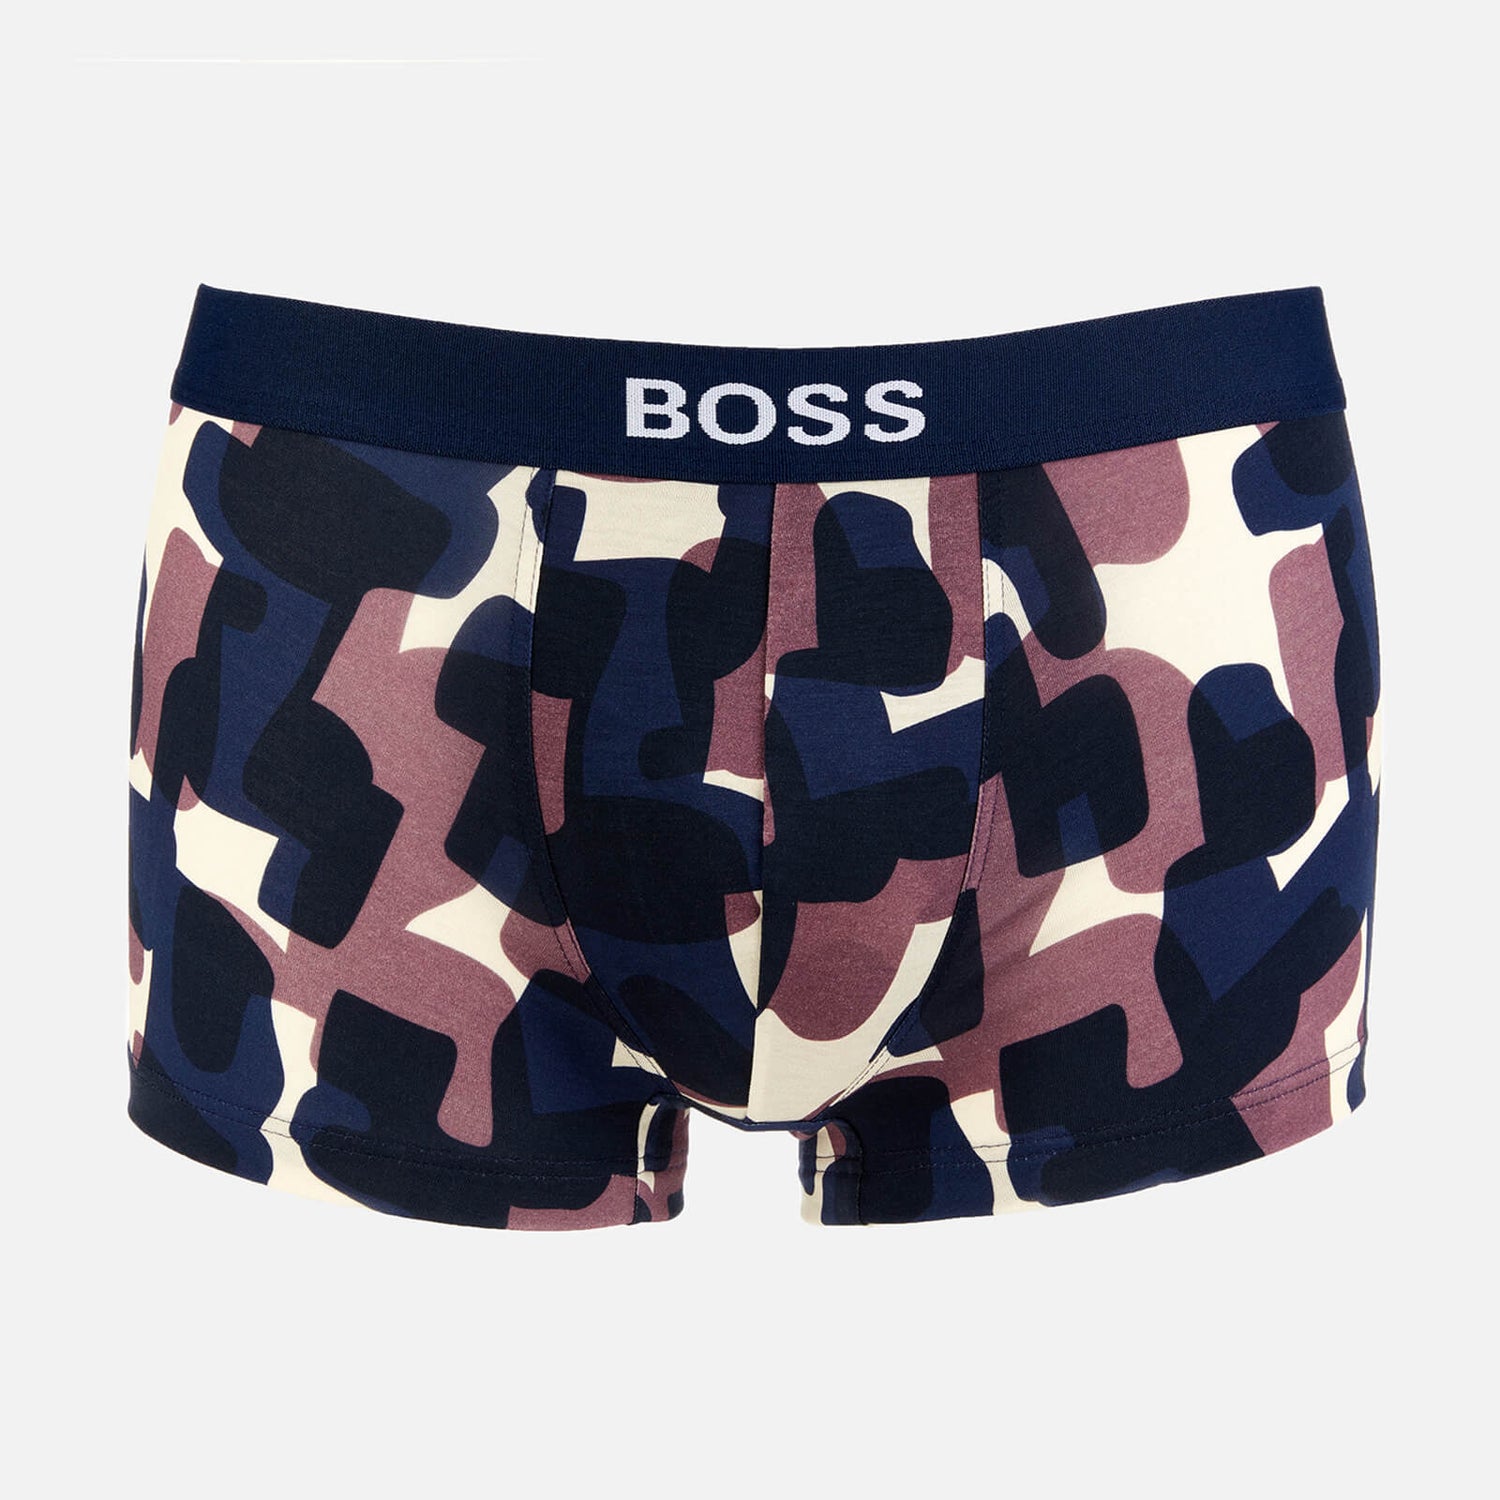 BOSS Bodywear Men's Refined Trunk Boxer Shorts - Medium Blue - S